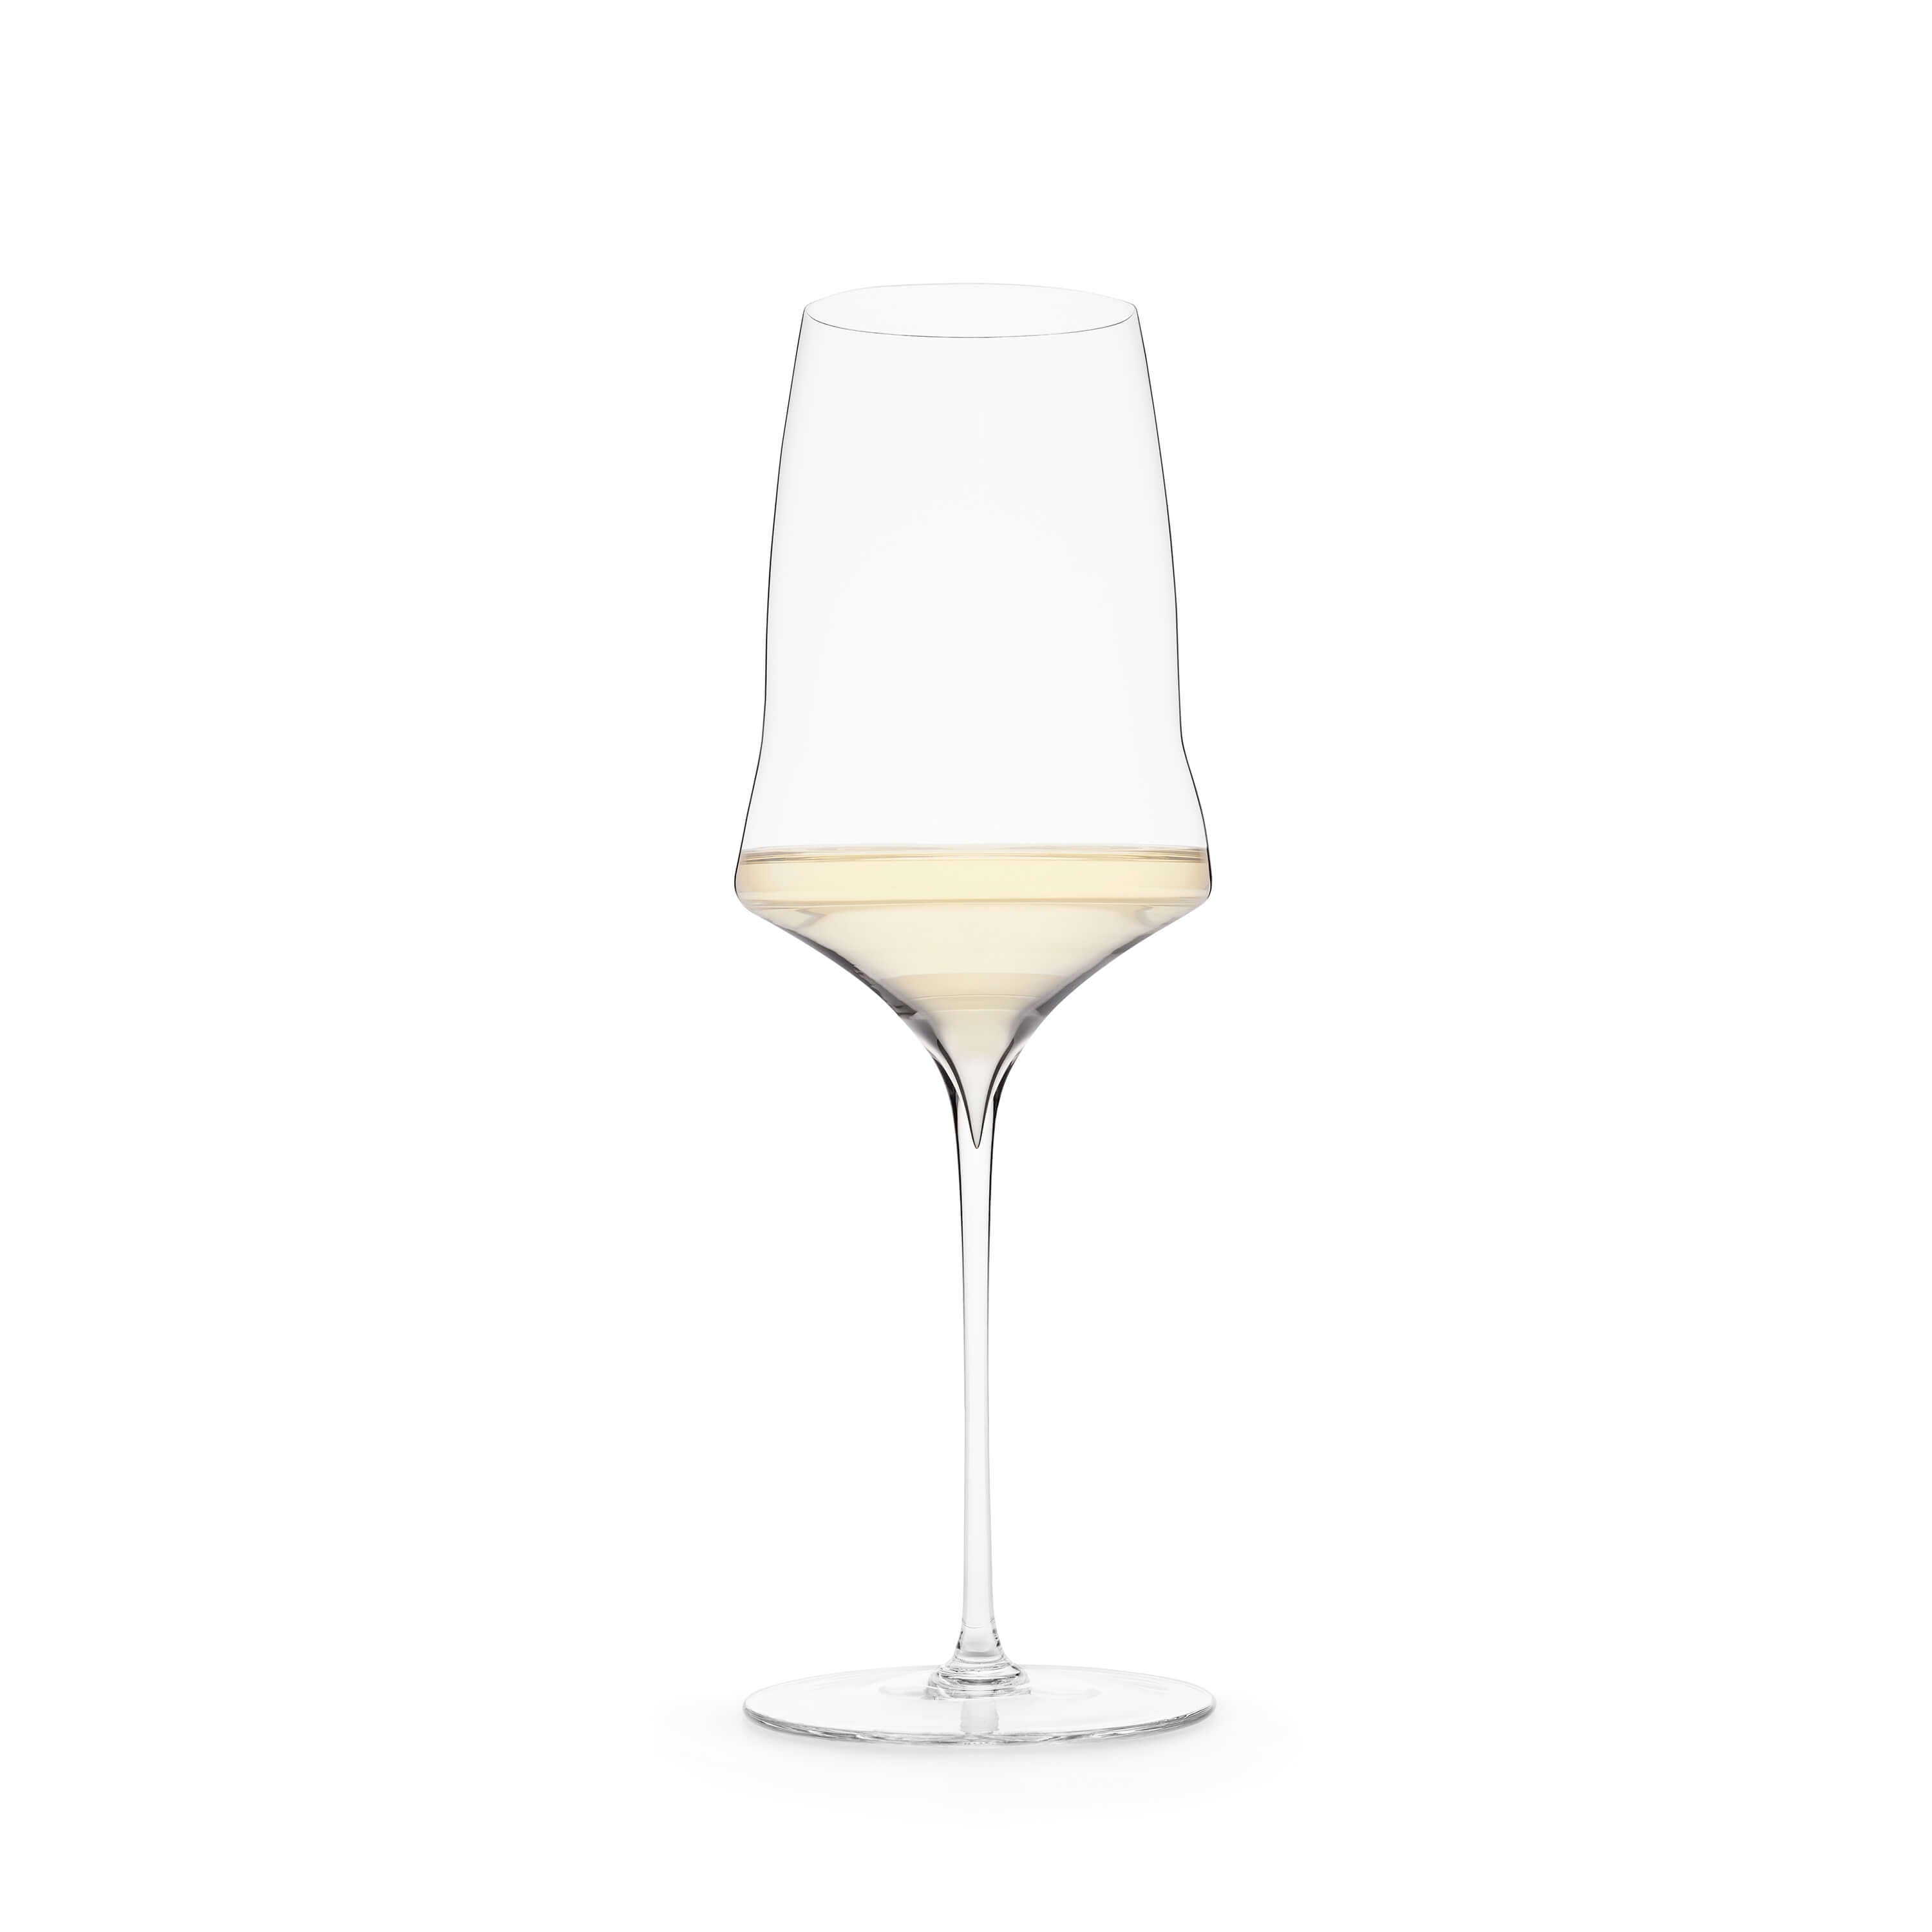 Josephine No 1 – White wine glass with a generous pour – Single Glass